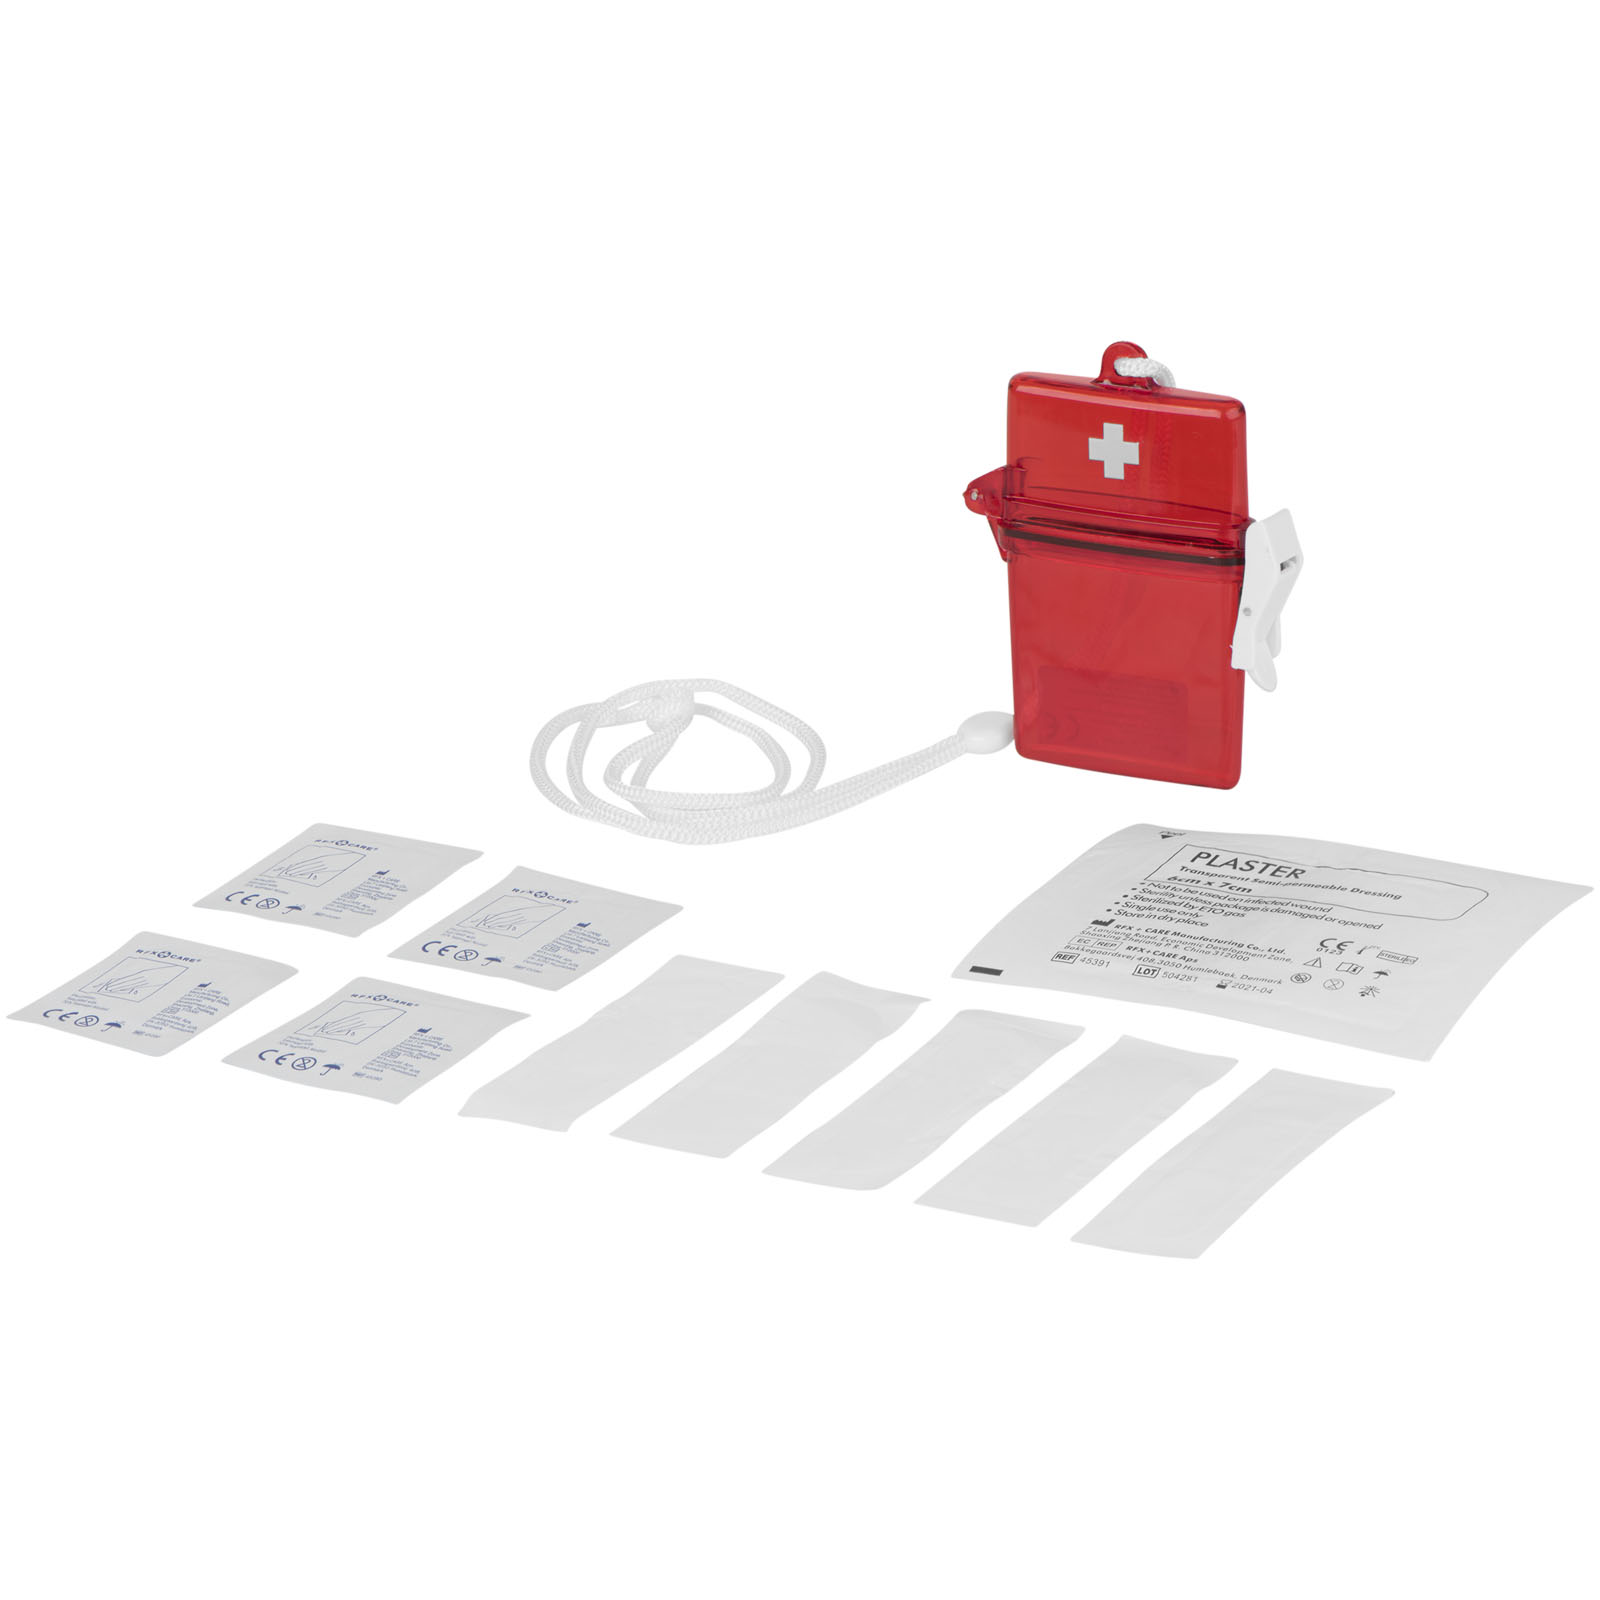 Erste-Hilfe-Set in transparenter roter Box - Altena 